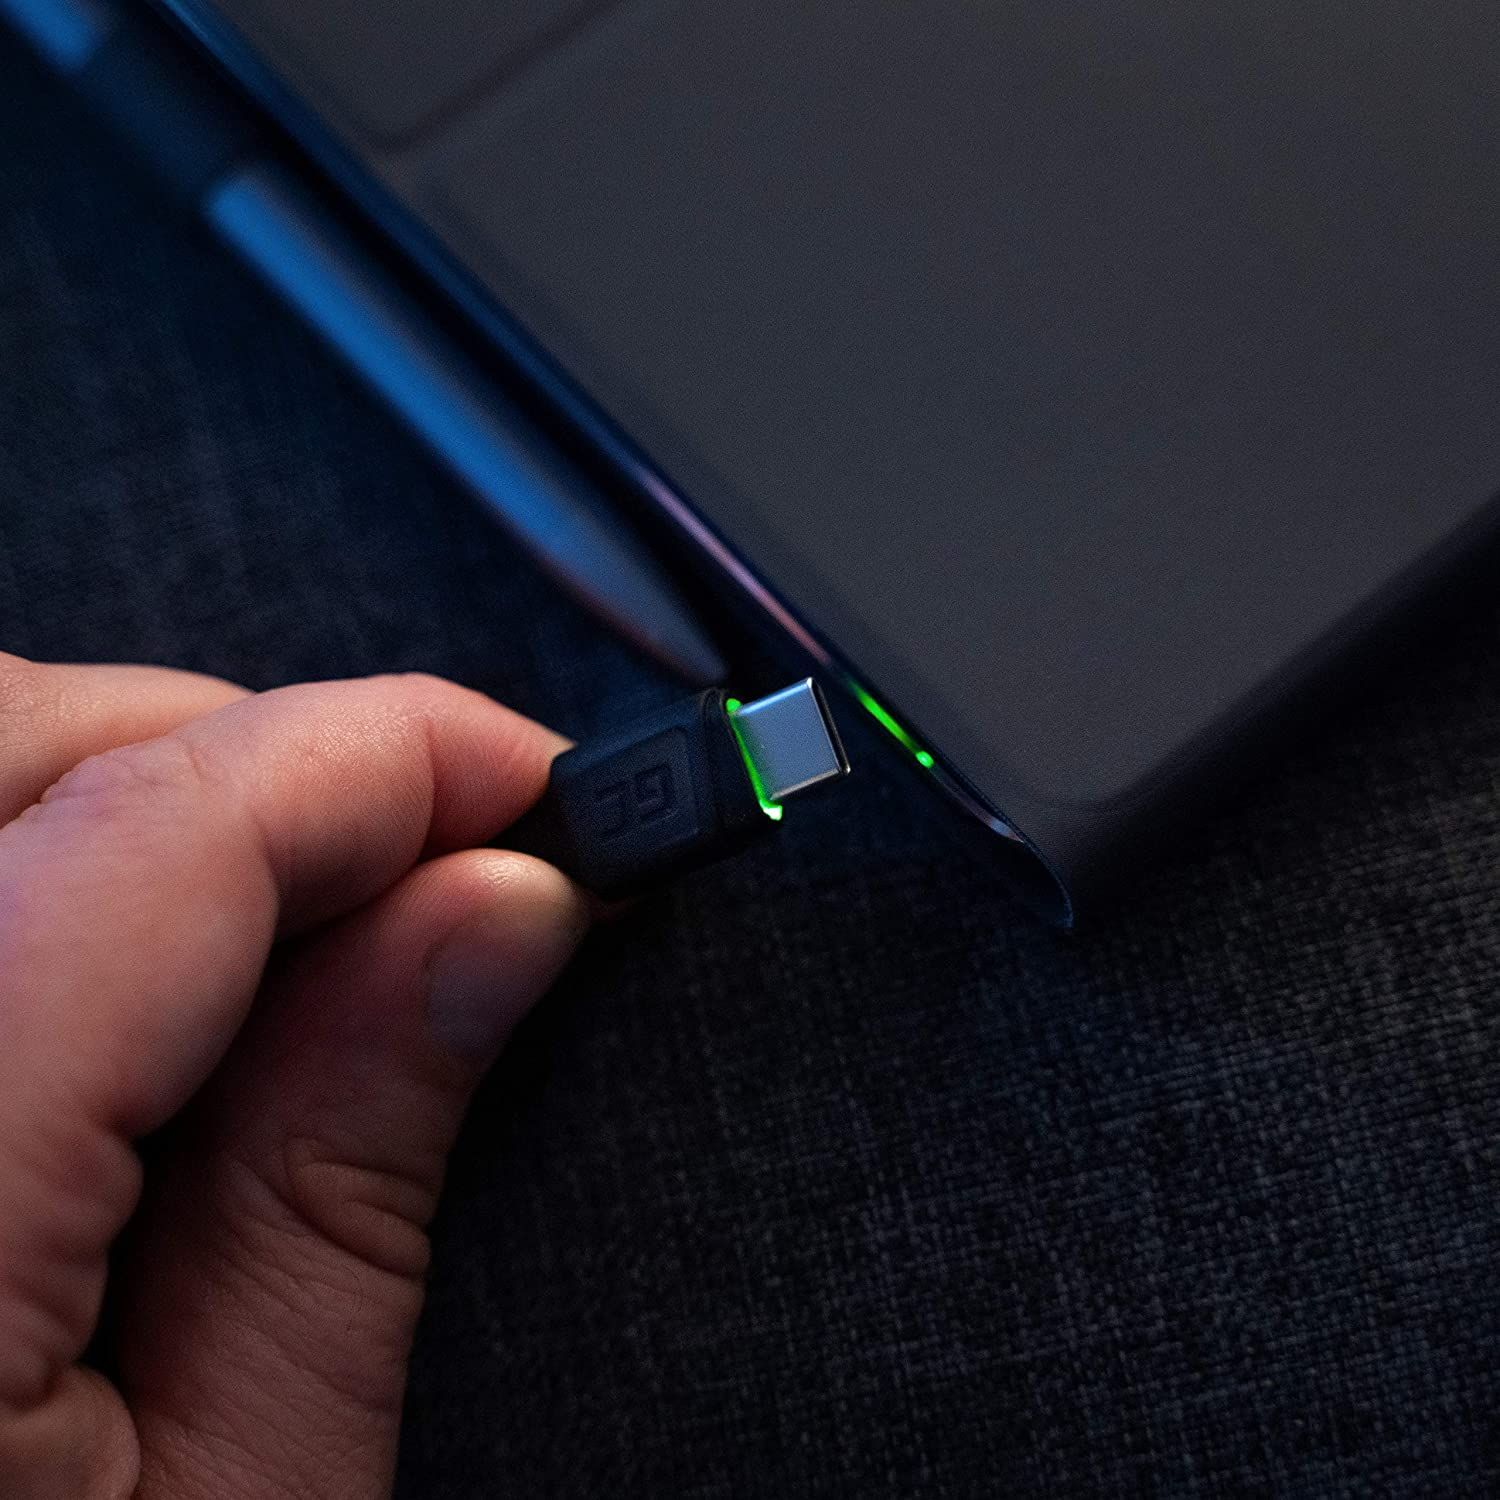 GREEN CELL USB-A USB-C (PC), und - Kabel Kabel Zubehör schwarz Grüne LED Adapter